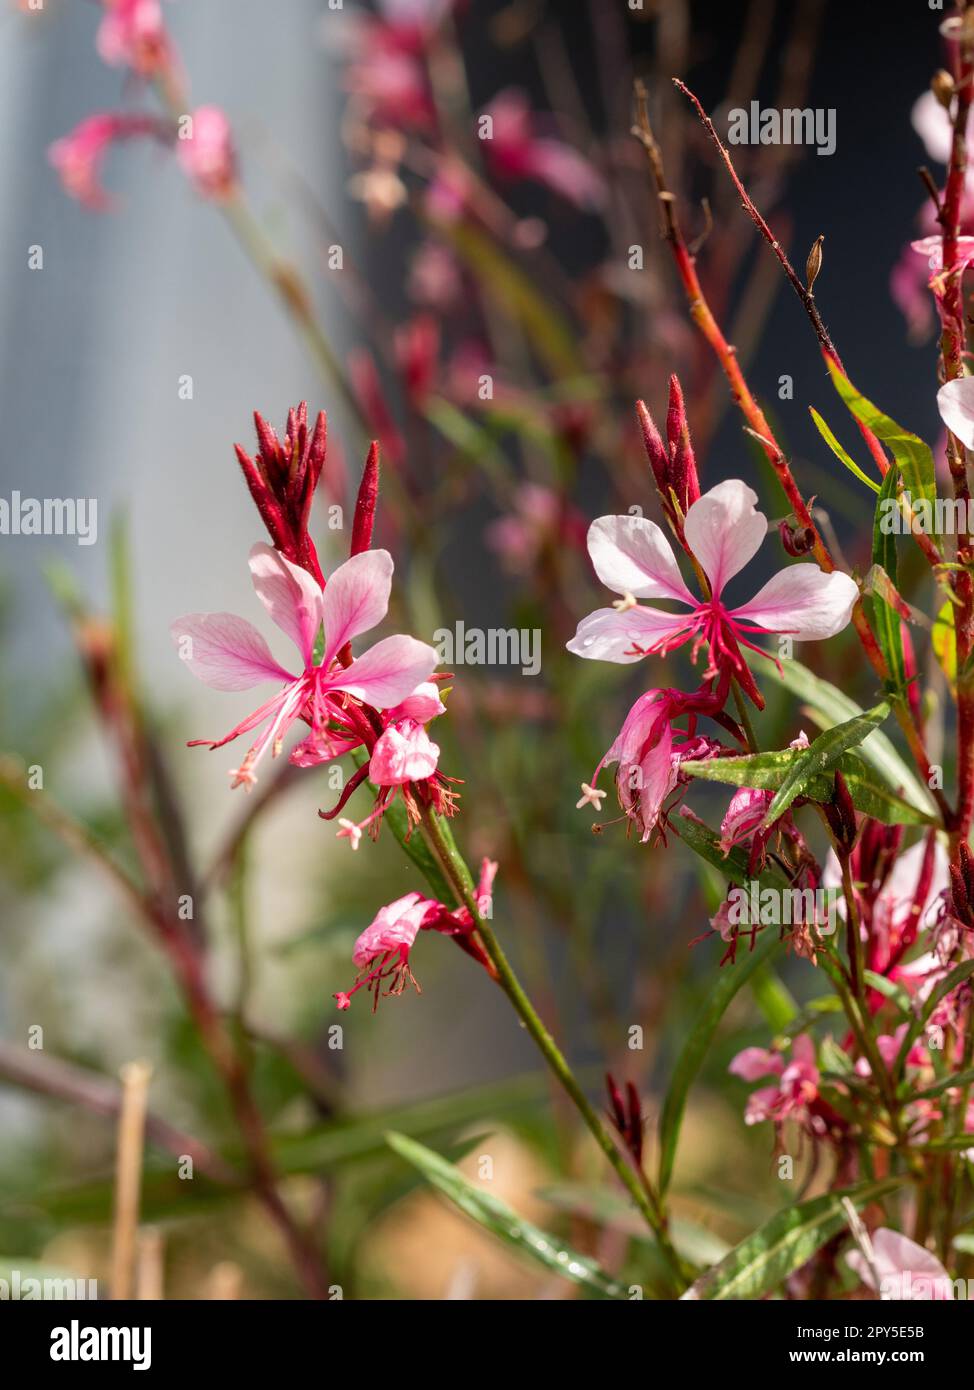 Pink Gaura Flowers or Whirling Butterflies, Gaura lindheimeri, blooming in an Australian coastal cottage garden Stock Photo